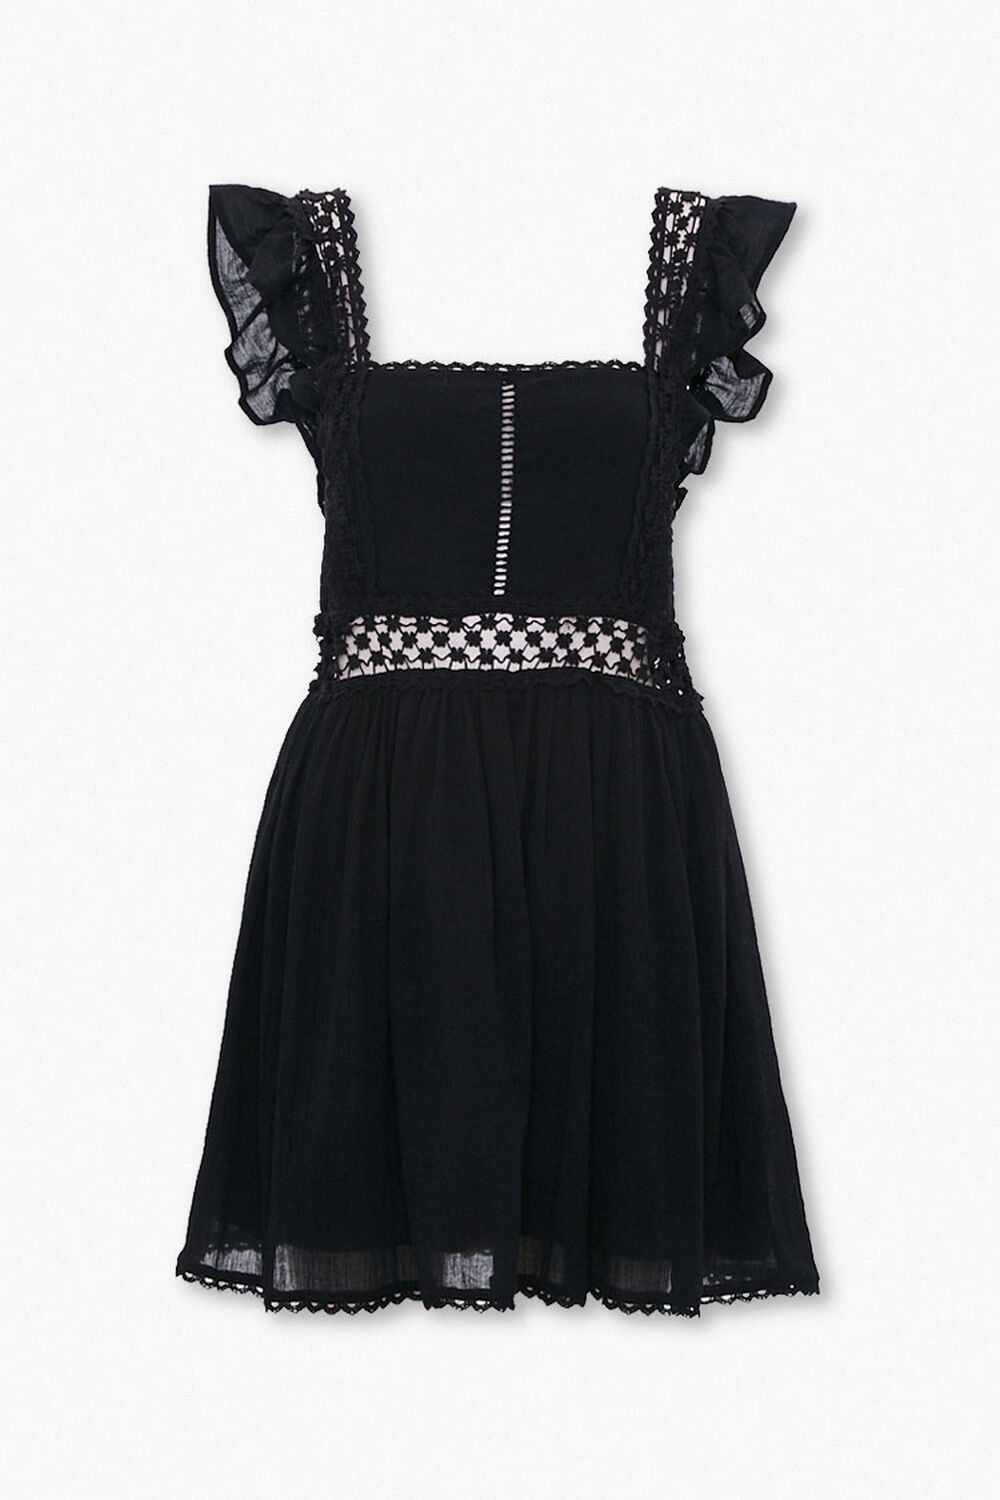 BLACK Crochet-Trim Fit & Flare Dress, image 1